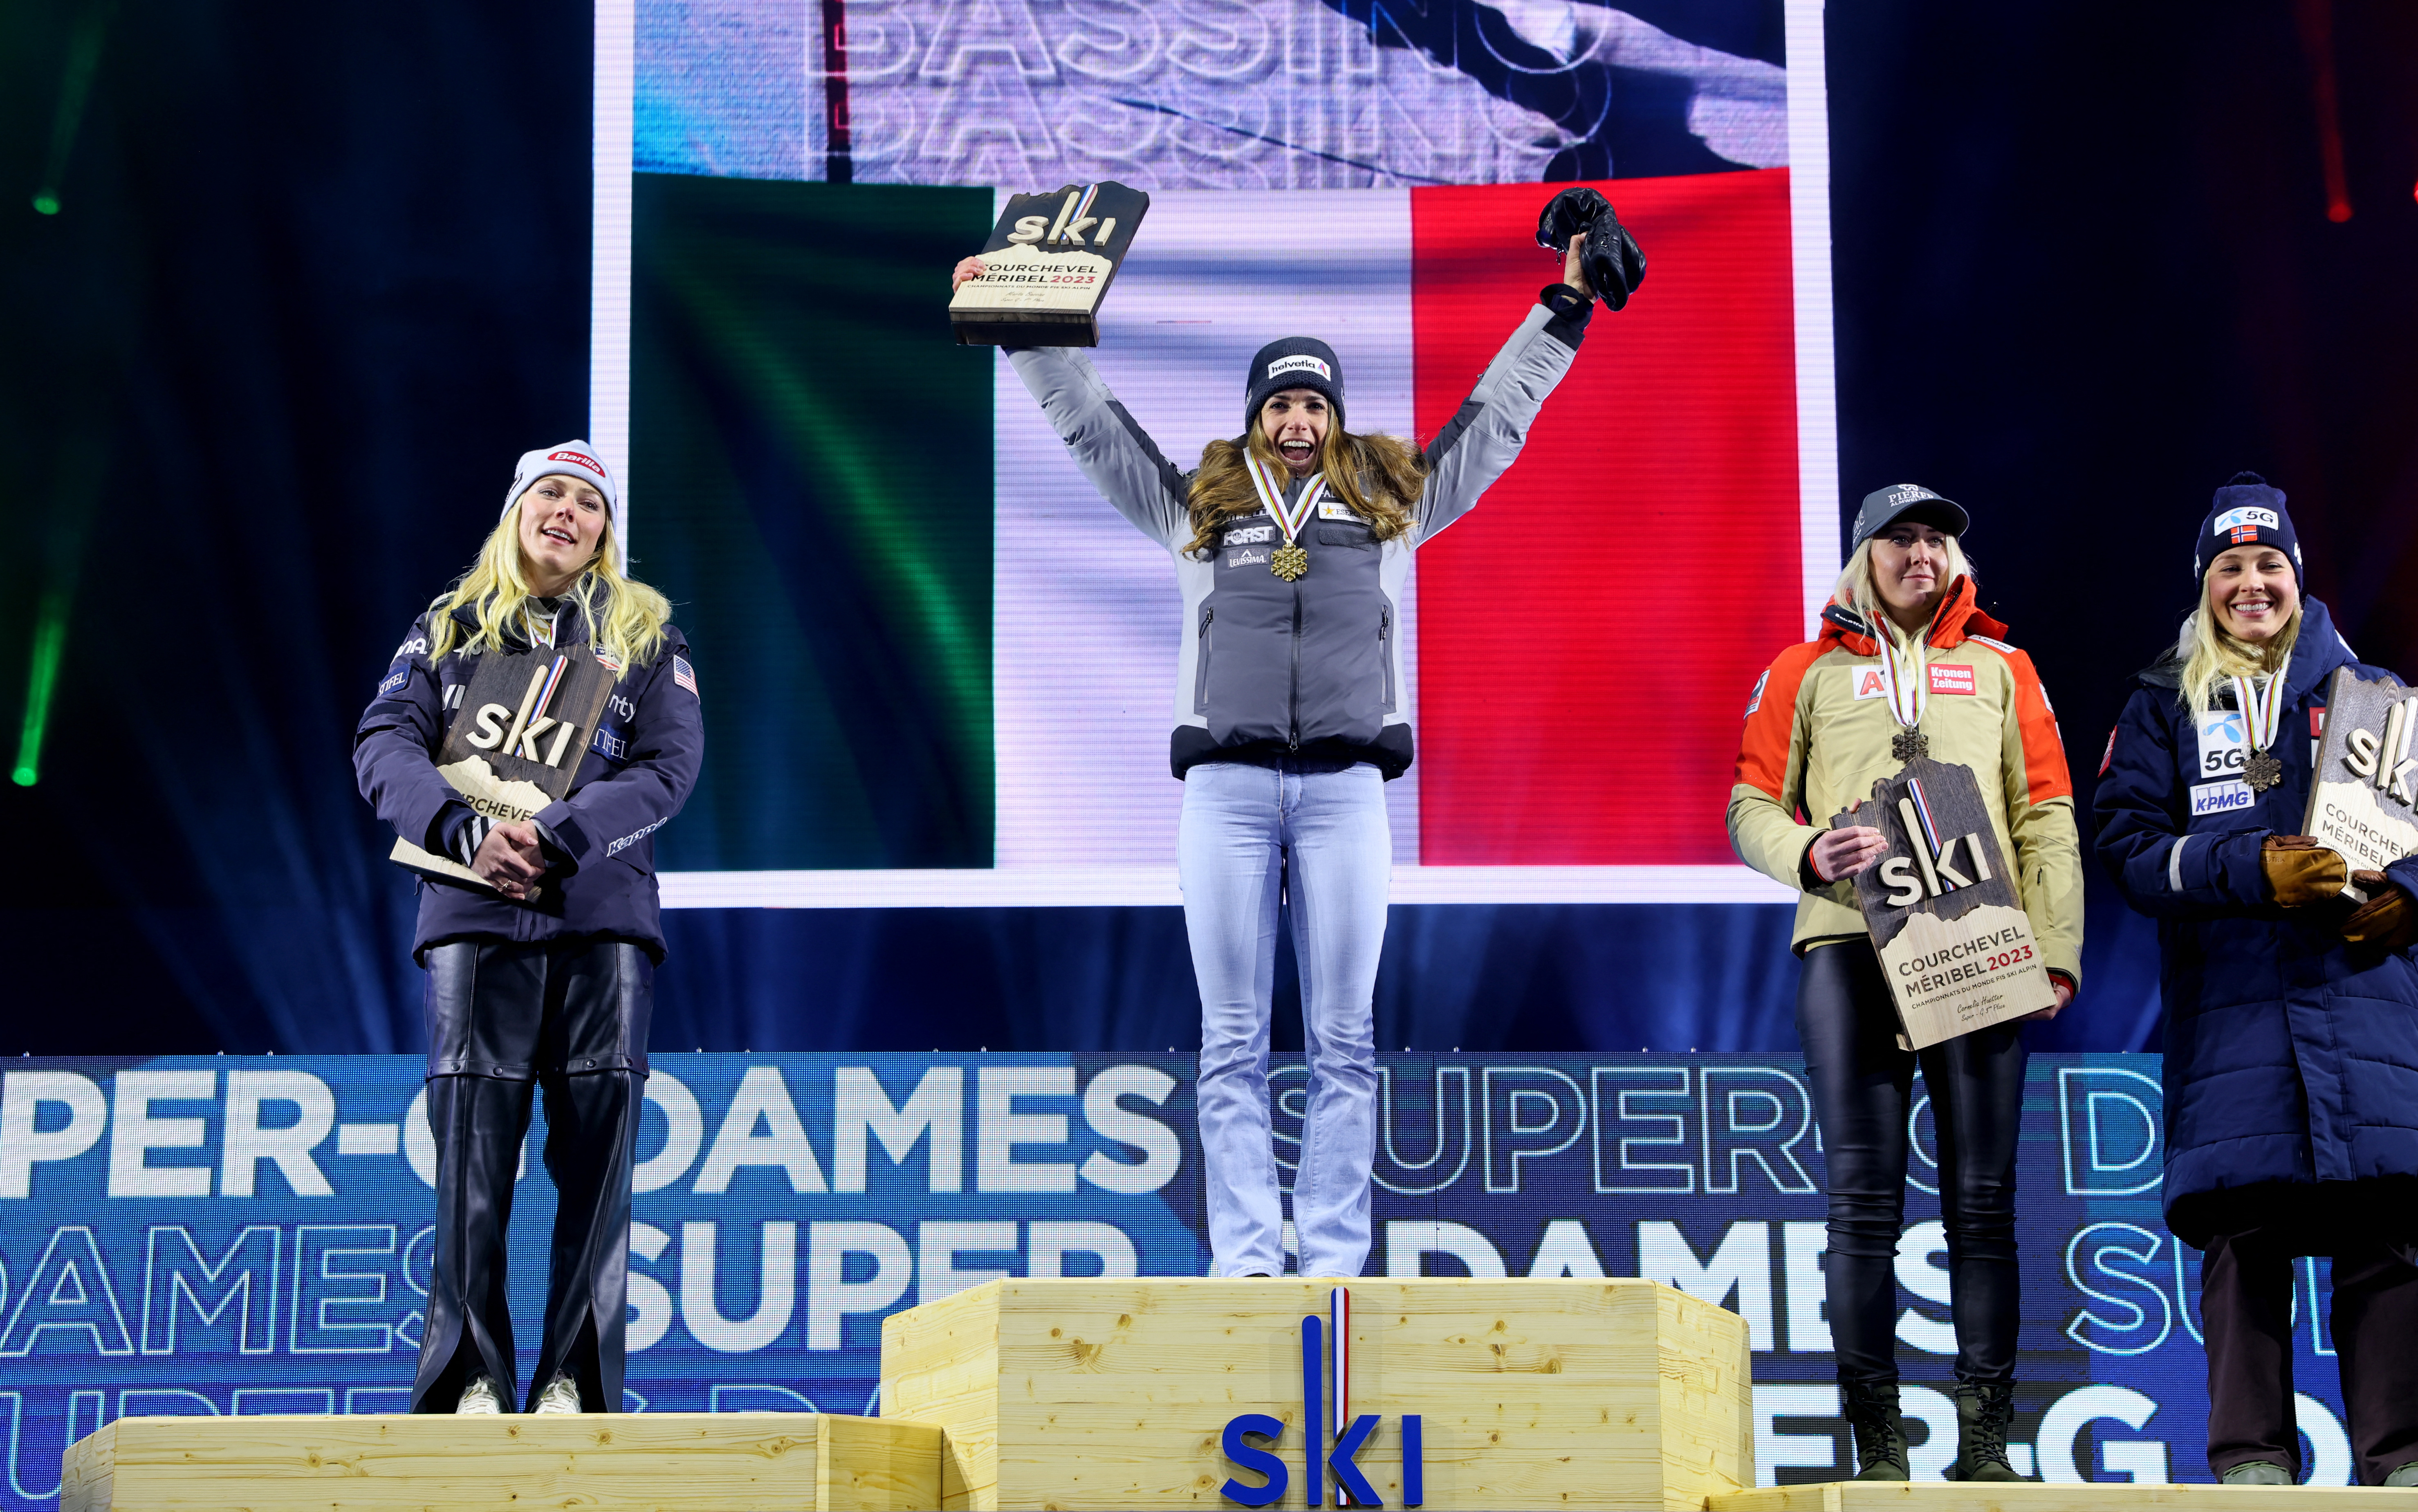 FIS Alpine Ski World Cup - Women's Super G